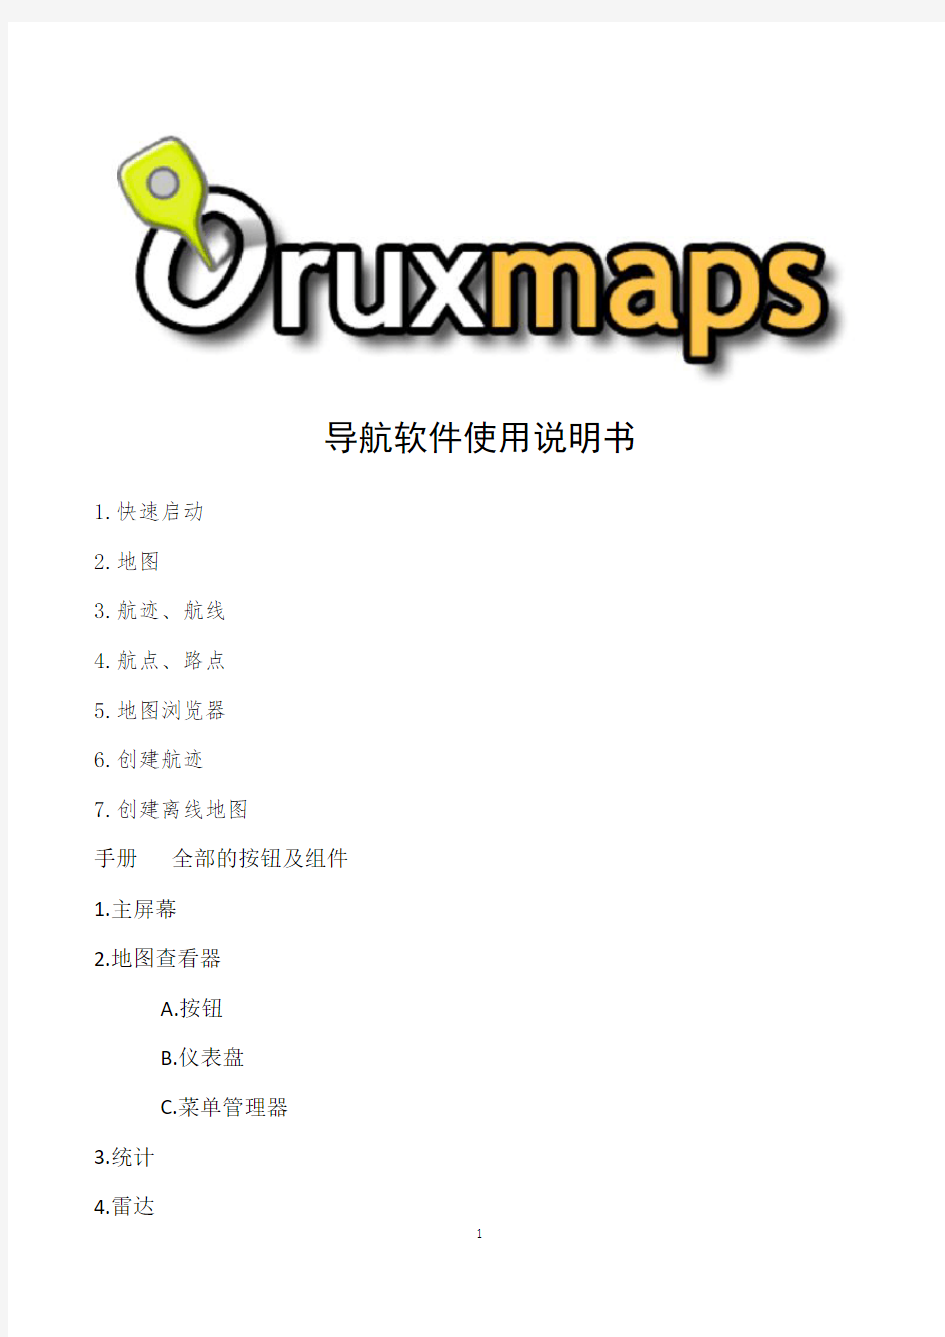 Oruxmaps_导航软件使用说明书